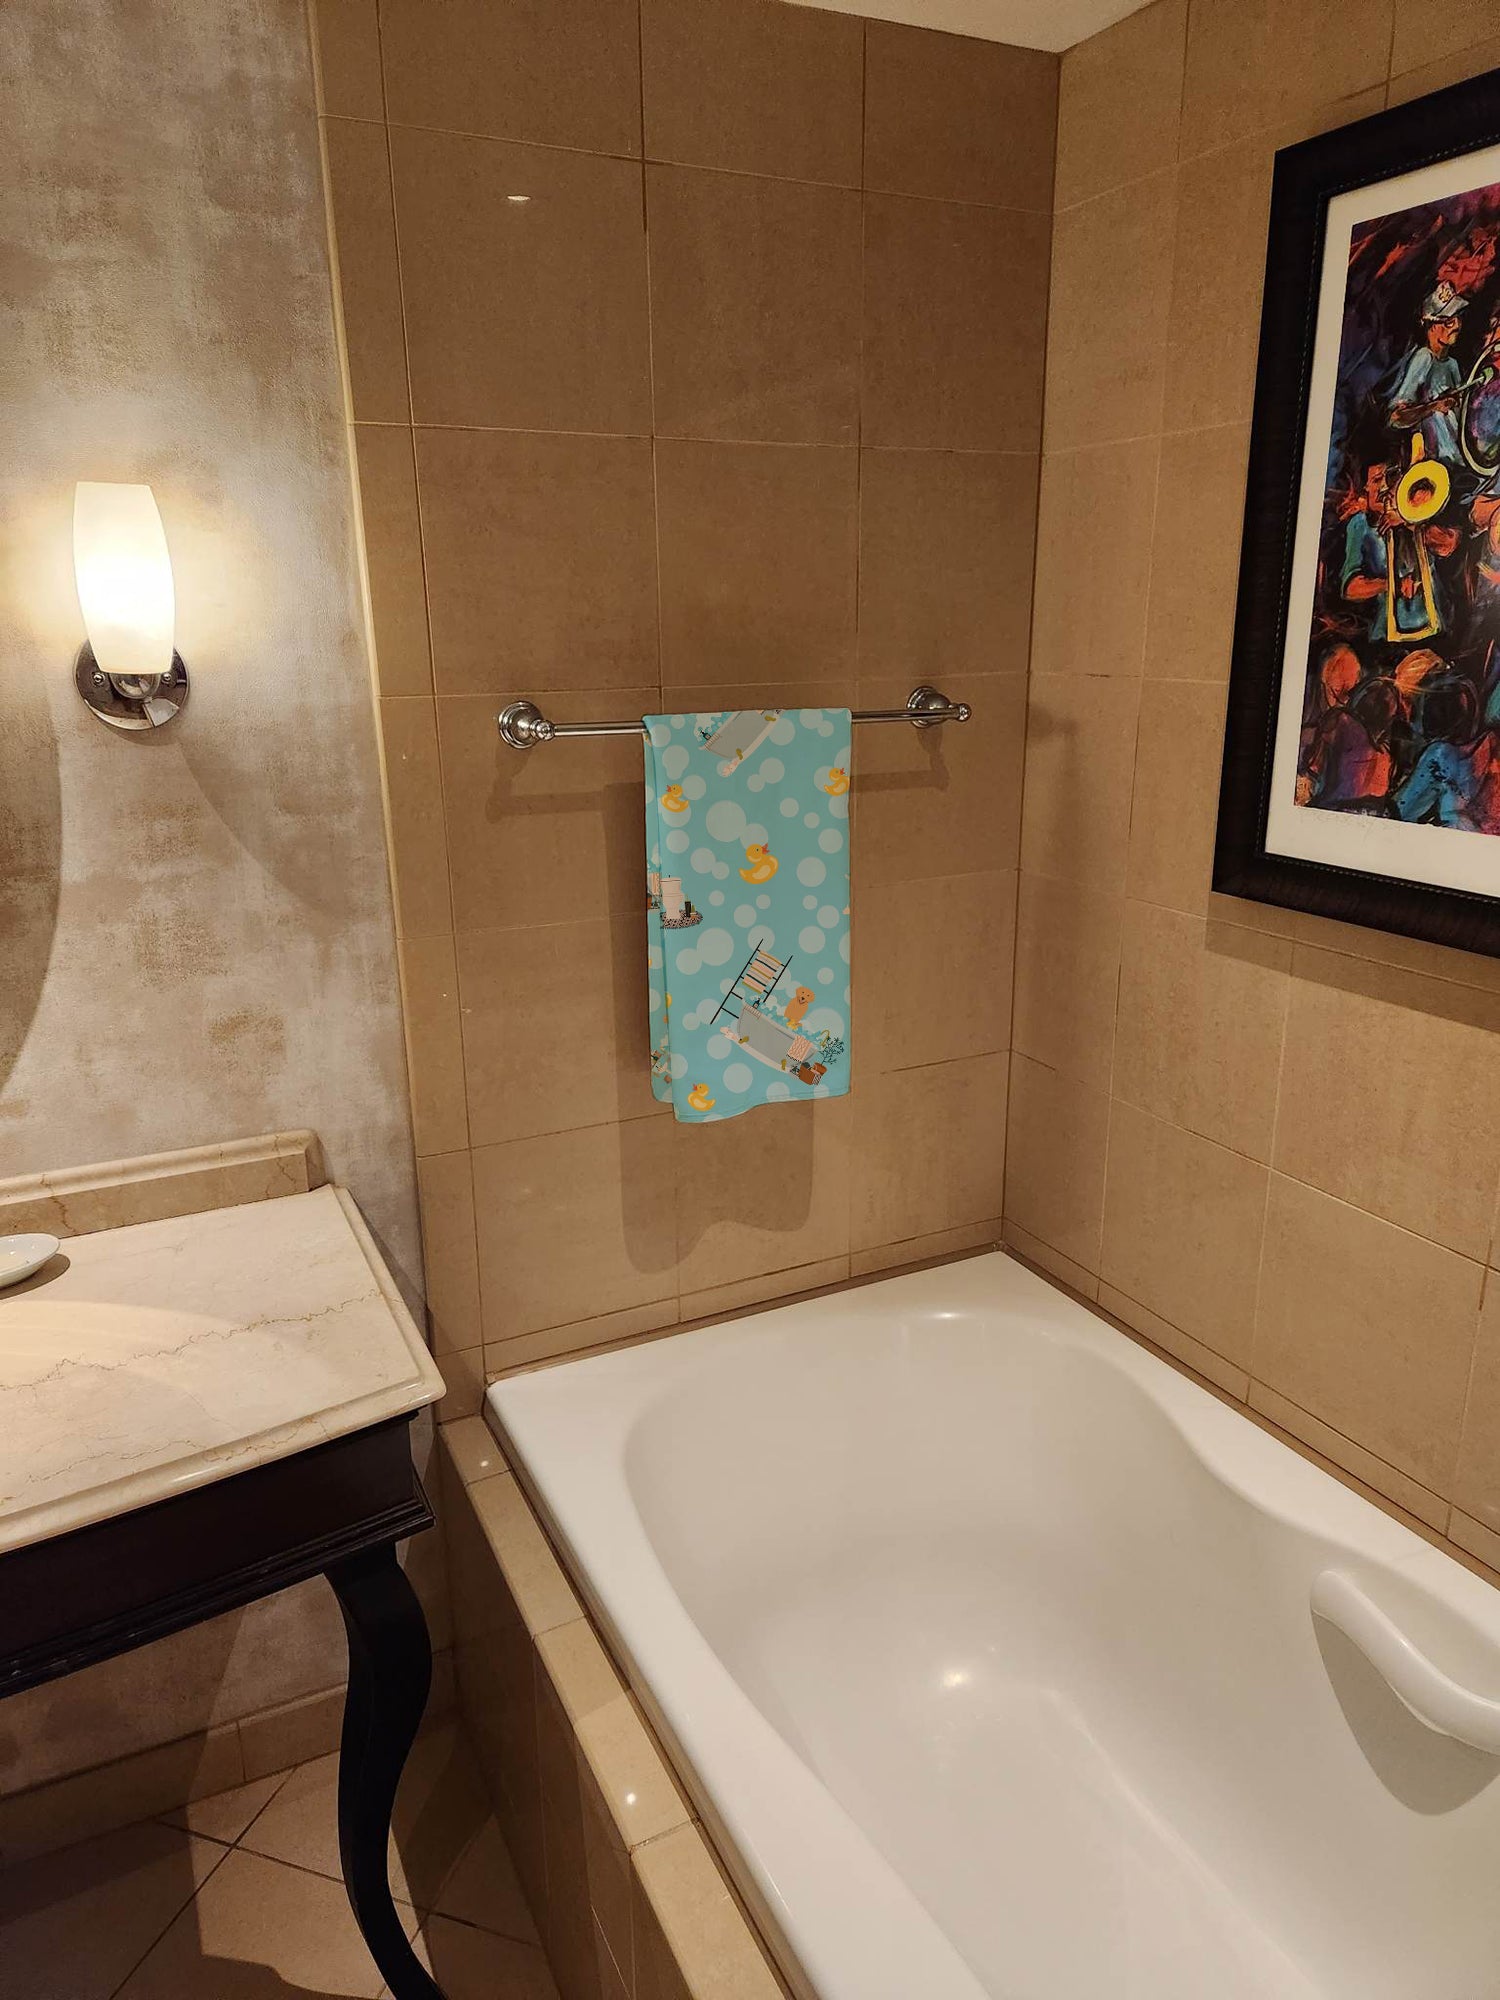 Buy this Gold Golden Retriever Bath Towel Large